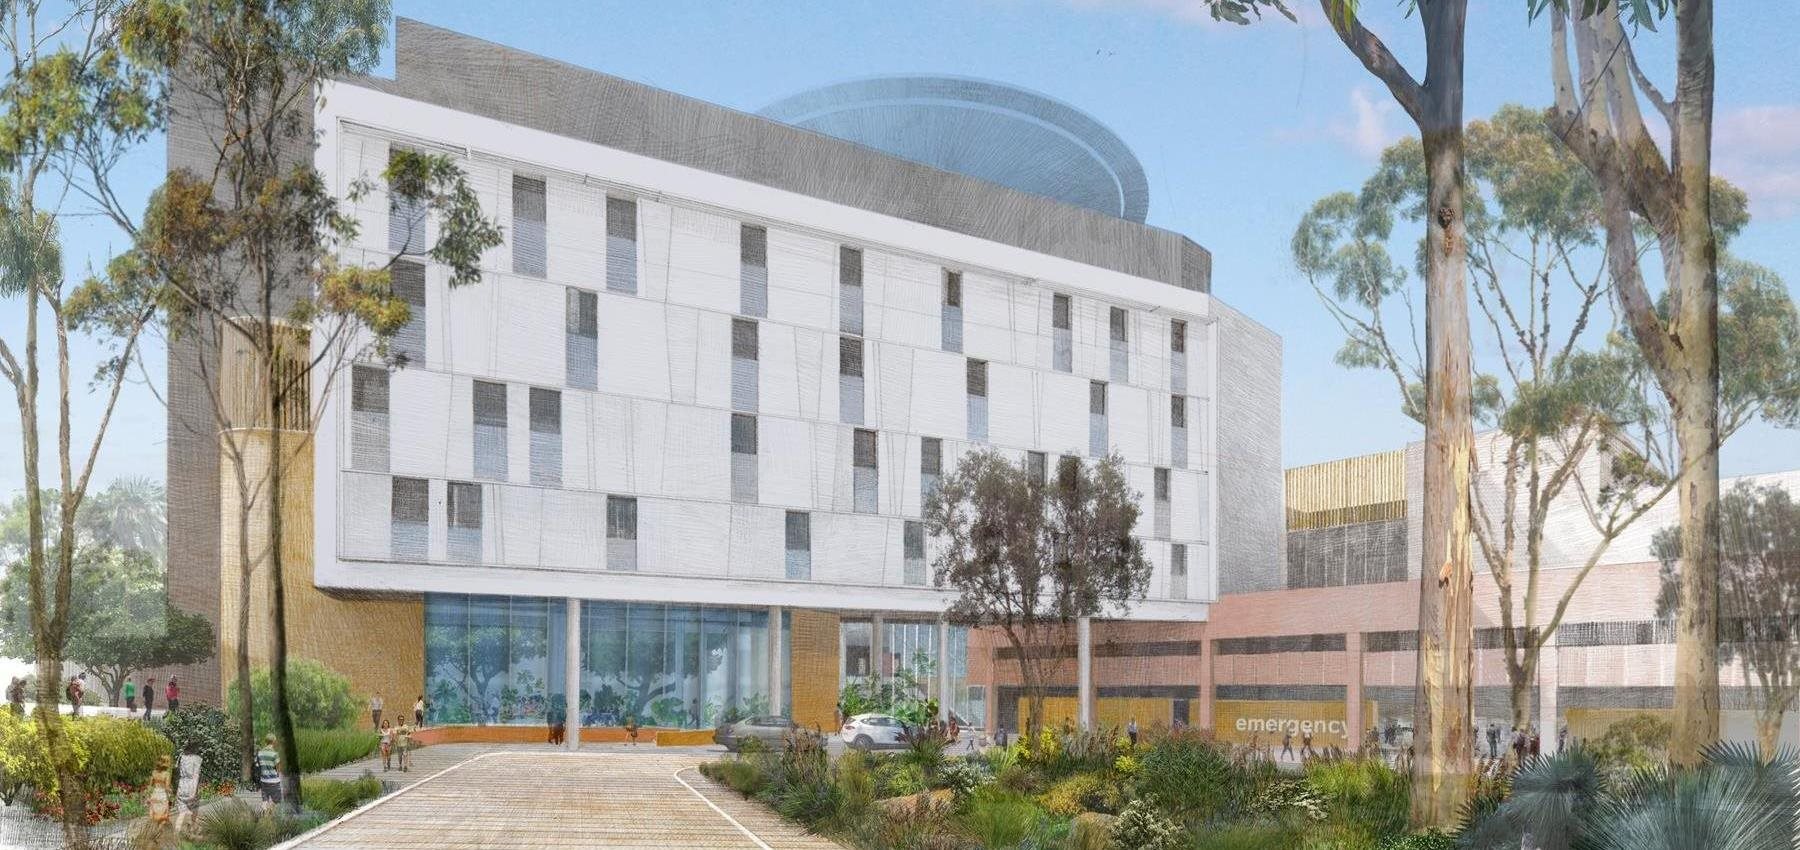 Designs for $438 million Shoalhaven Hospital unveiled